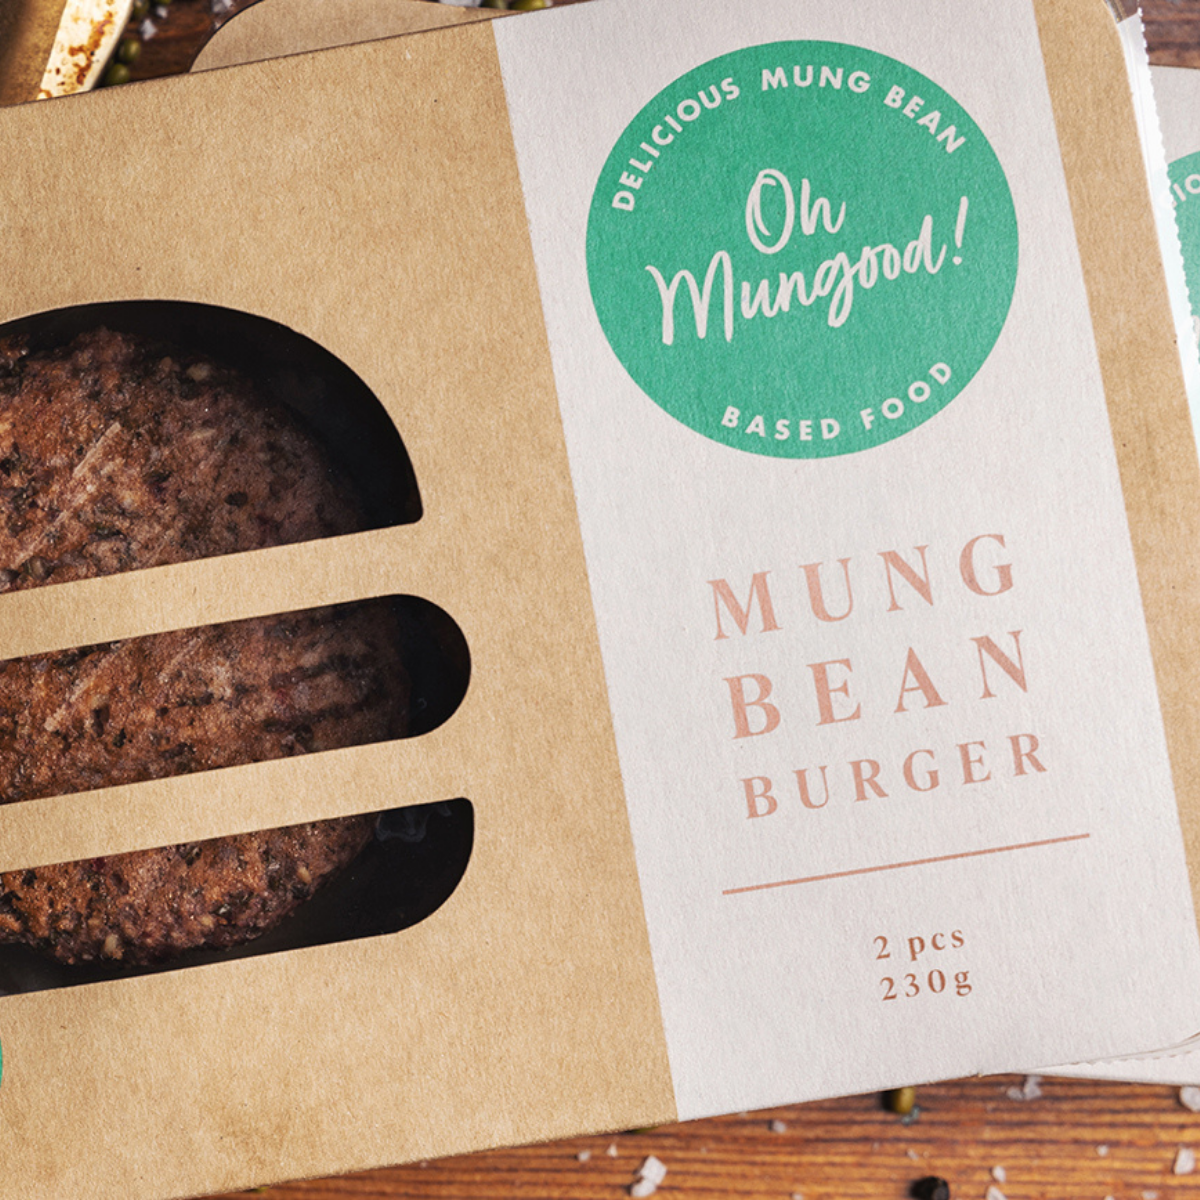 OMG Plantbased Food - Oh Mungood's Oh Mungoods mungburgare '